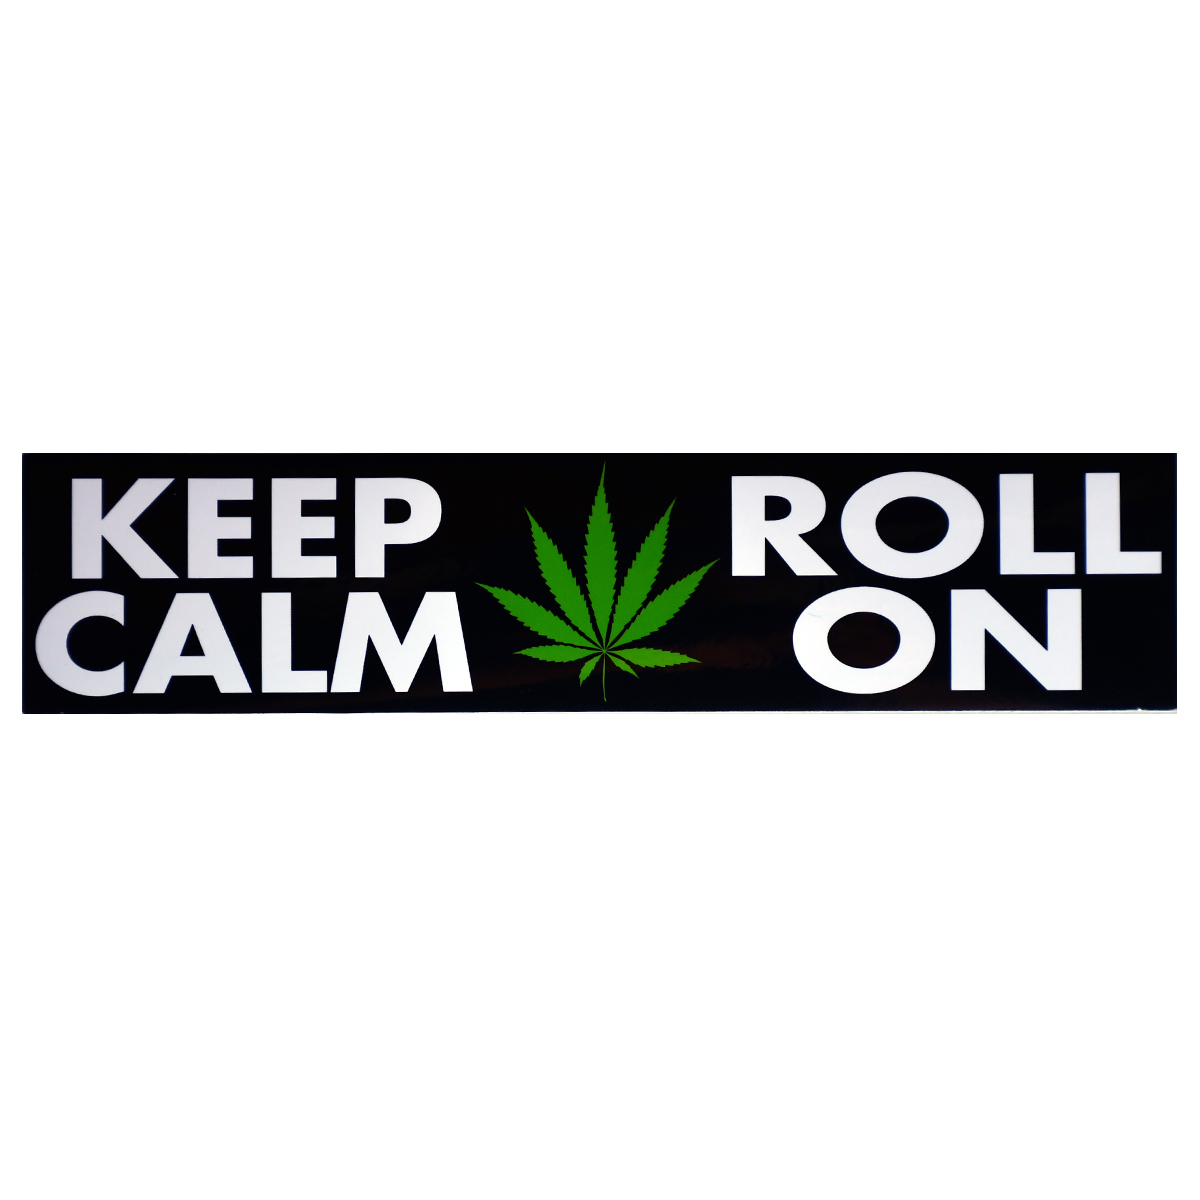 Keep Calm Roll On Bumper Sticker